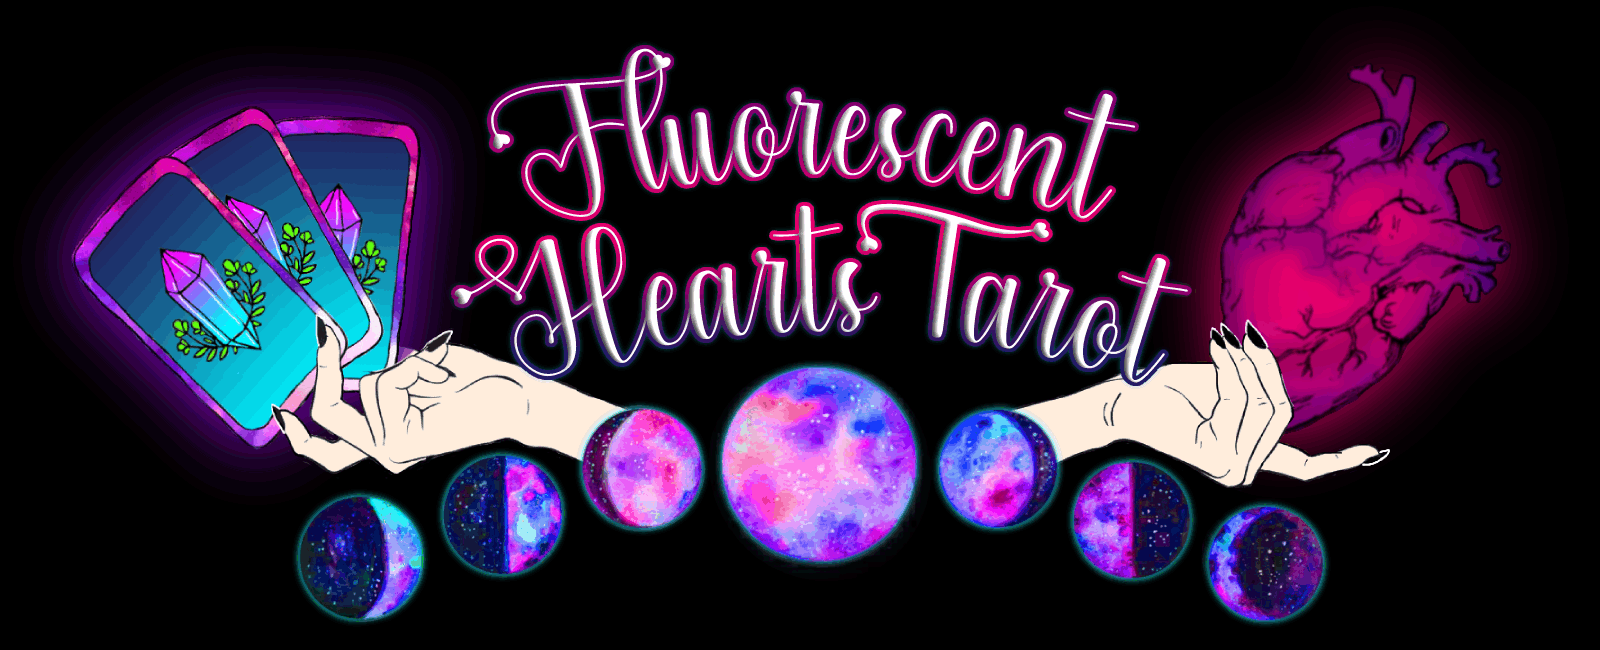 Fluorescent Hearts Tarot